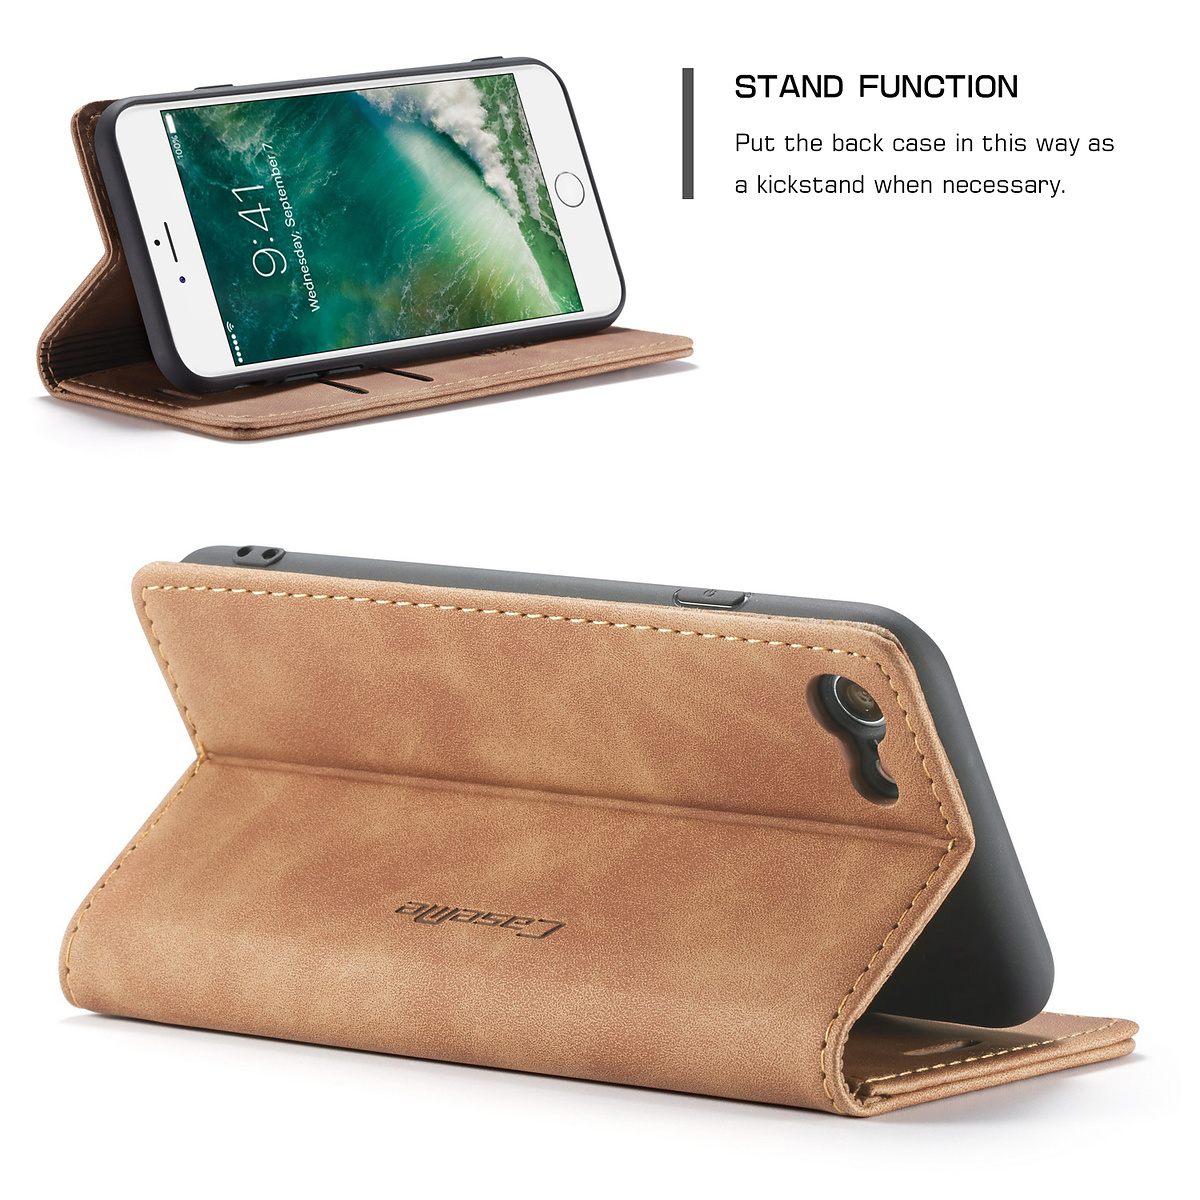 CaseMe plånboksfodral till iPhone 8/7, brun